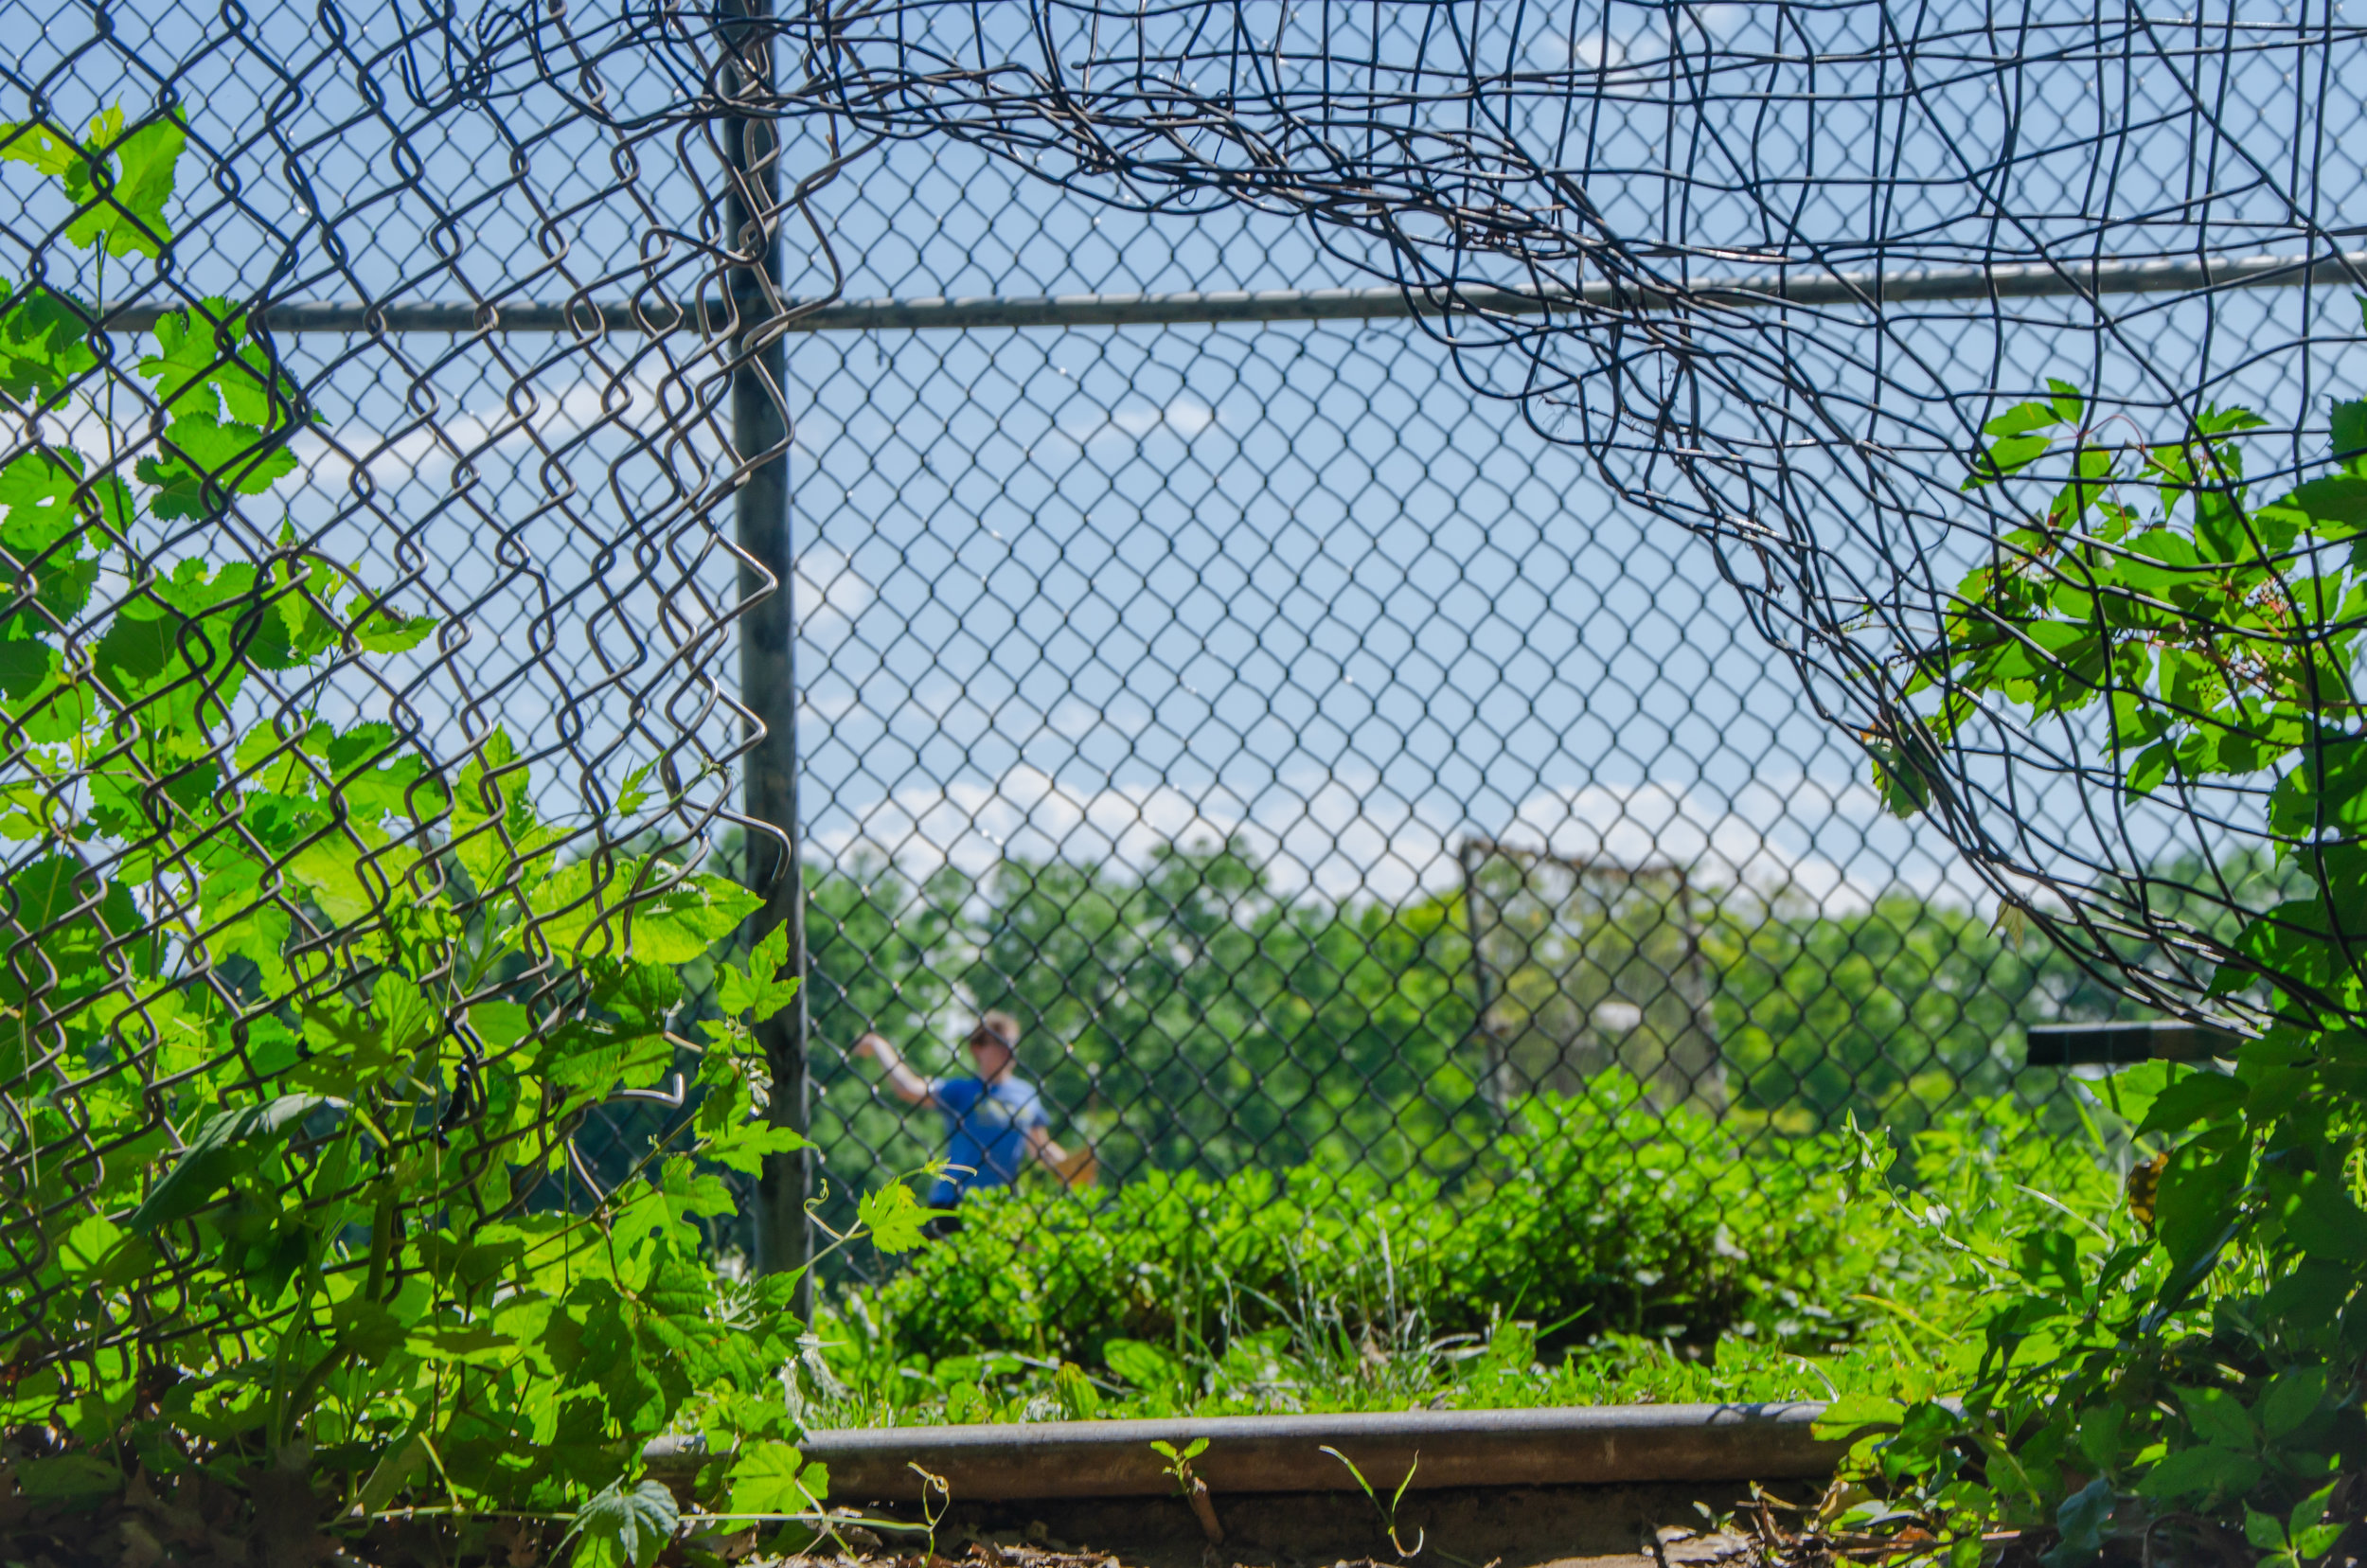 baseball through the fence - vc park.jpg